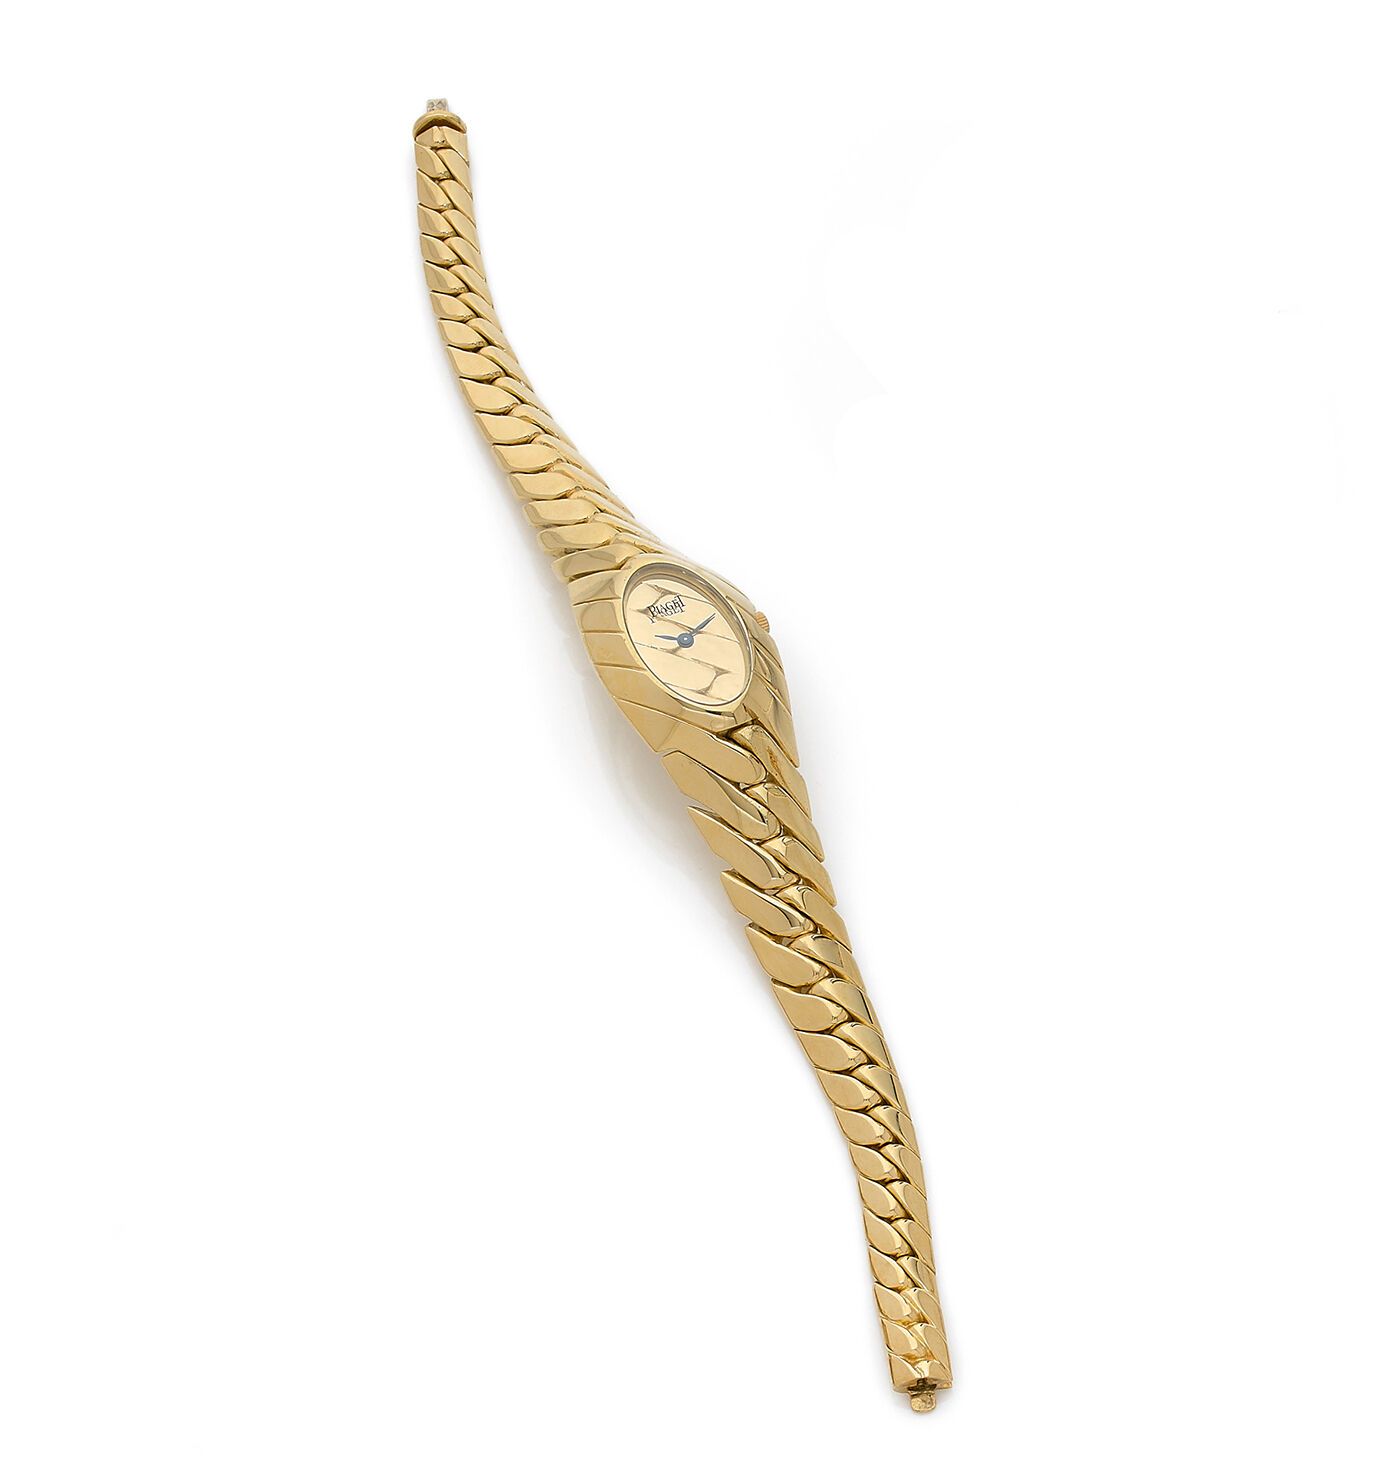 PIAGET PIAGET
Ladies' watch bracelet in 18K gold with gourmet links, oval dial, &hellip;